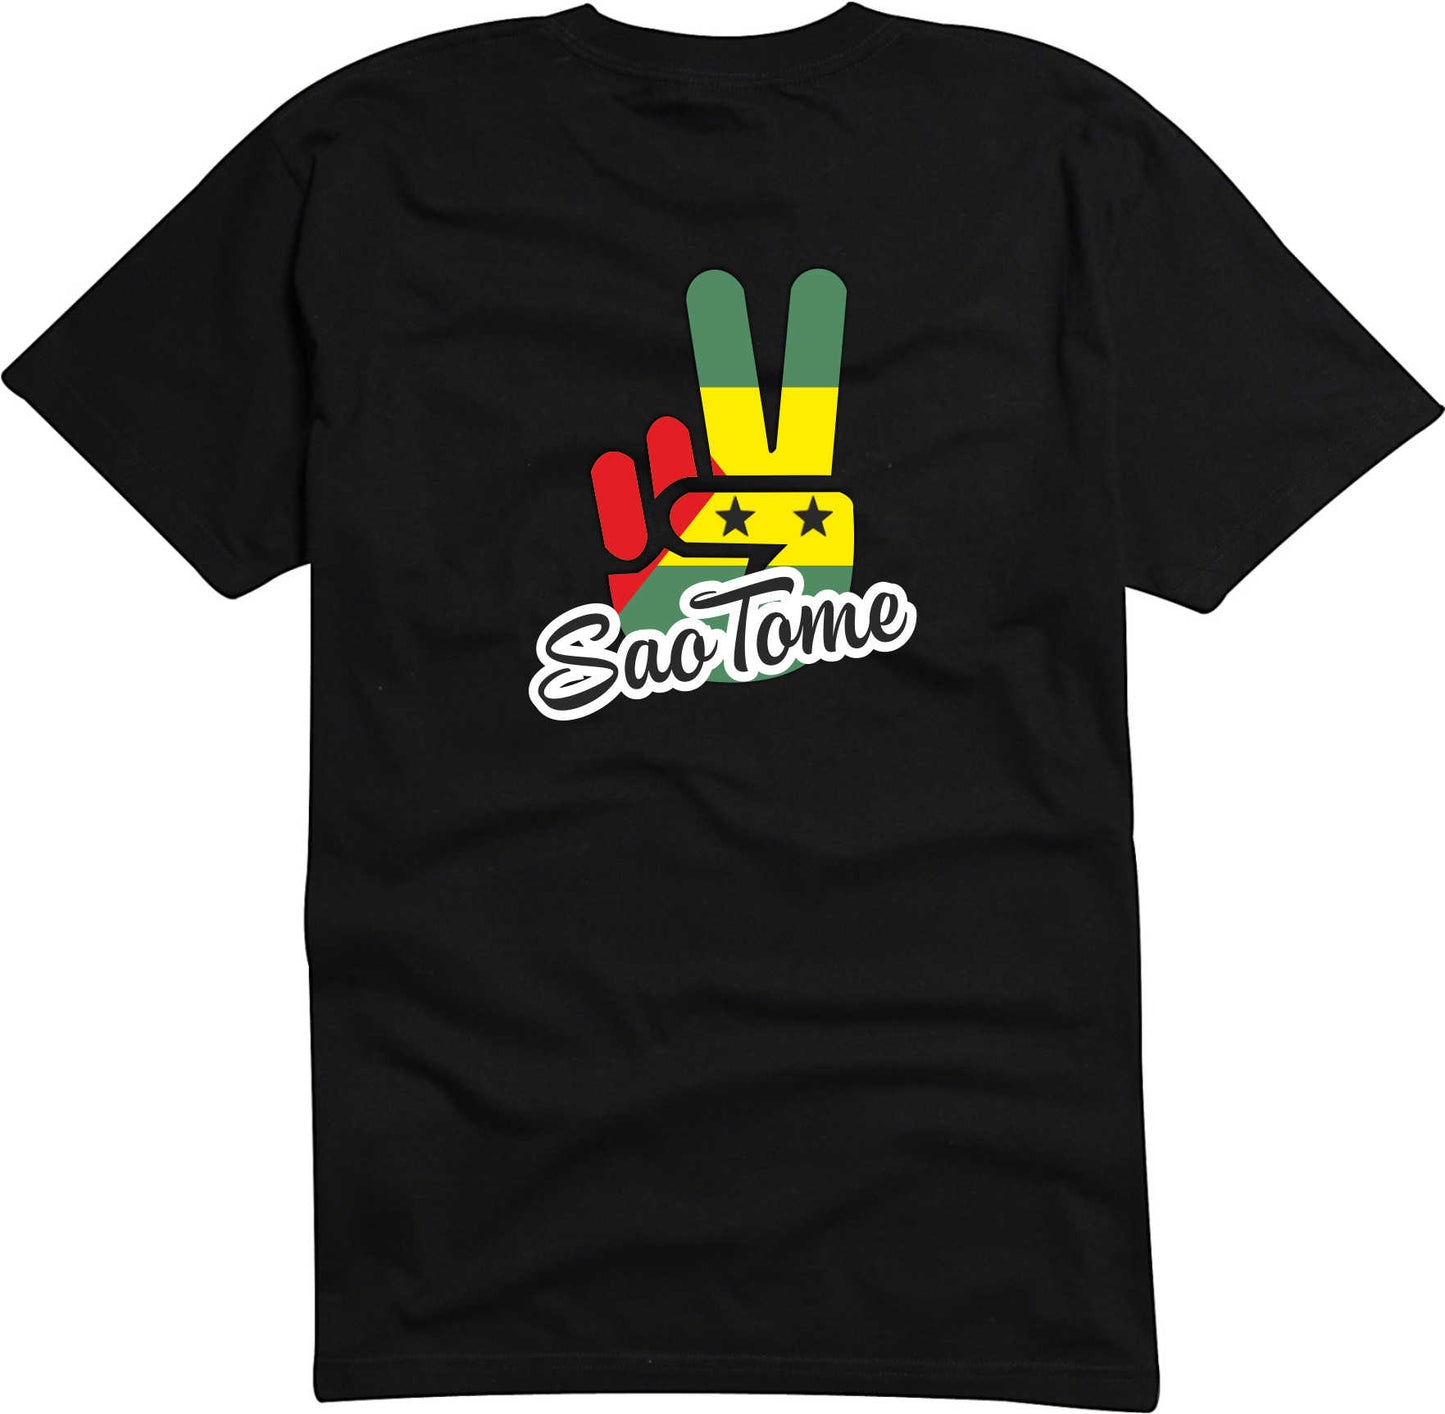 T-Shirt Herren - Victory - Flagge / Fahne - Sao Tome - Sieg